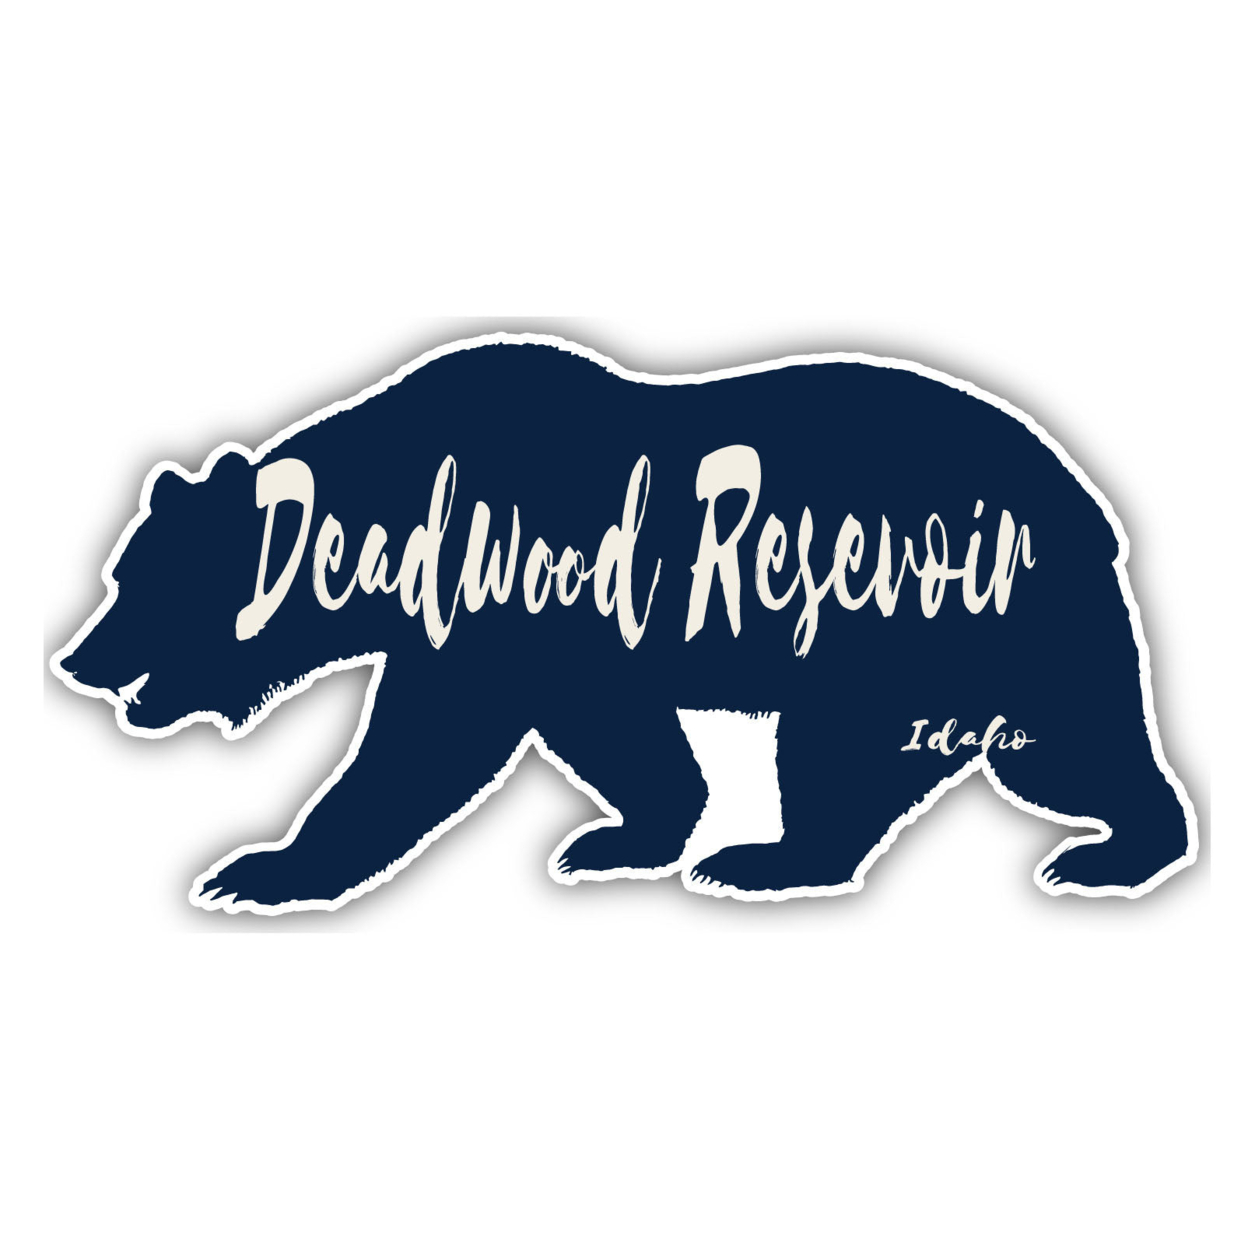 Deadwood Resevoir Idaho Souvenir Decorative Stickers (Choose Theme And Size) - Single Unit, 10-Inch, Bear